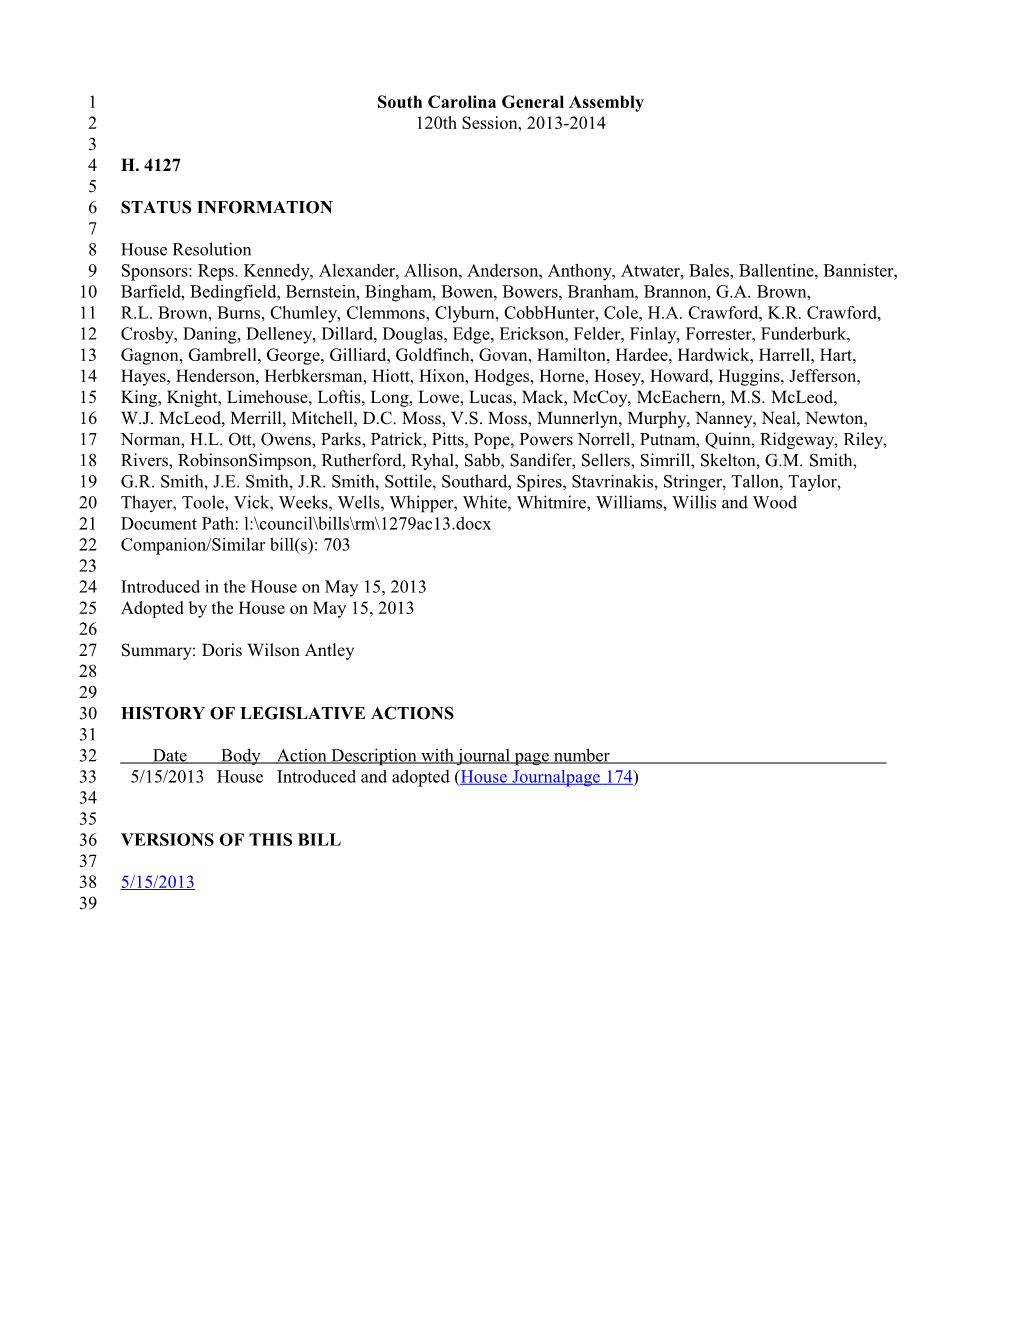 2013-2014 Bill 4127: Doris Wilson Antley - South Carolina Legislature Online